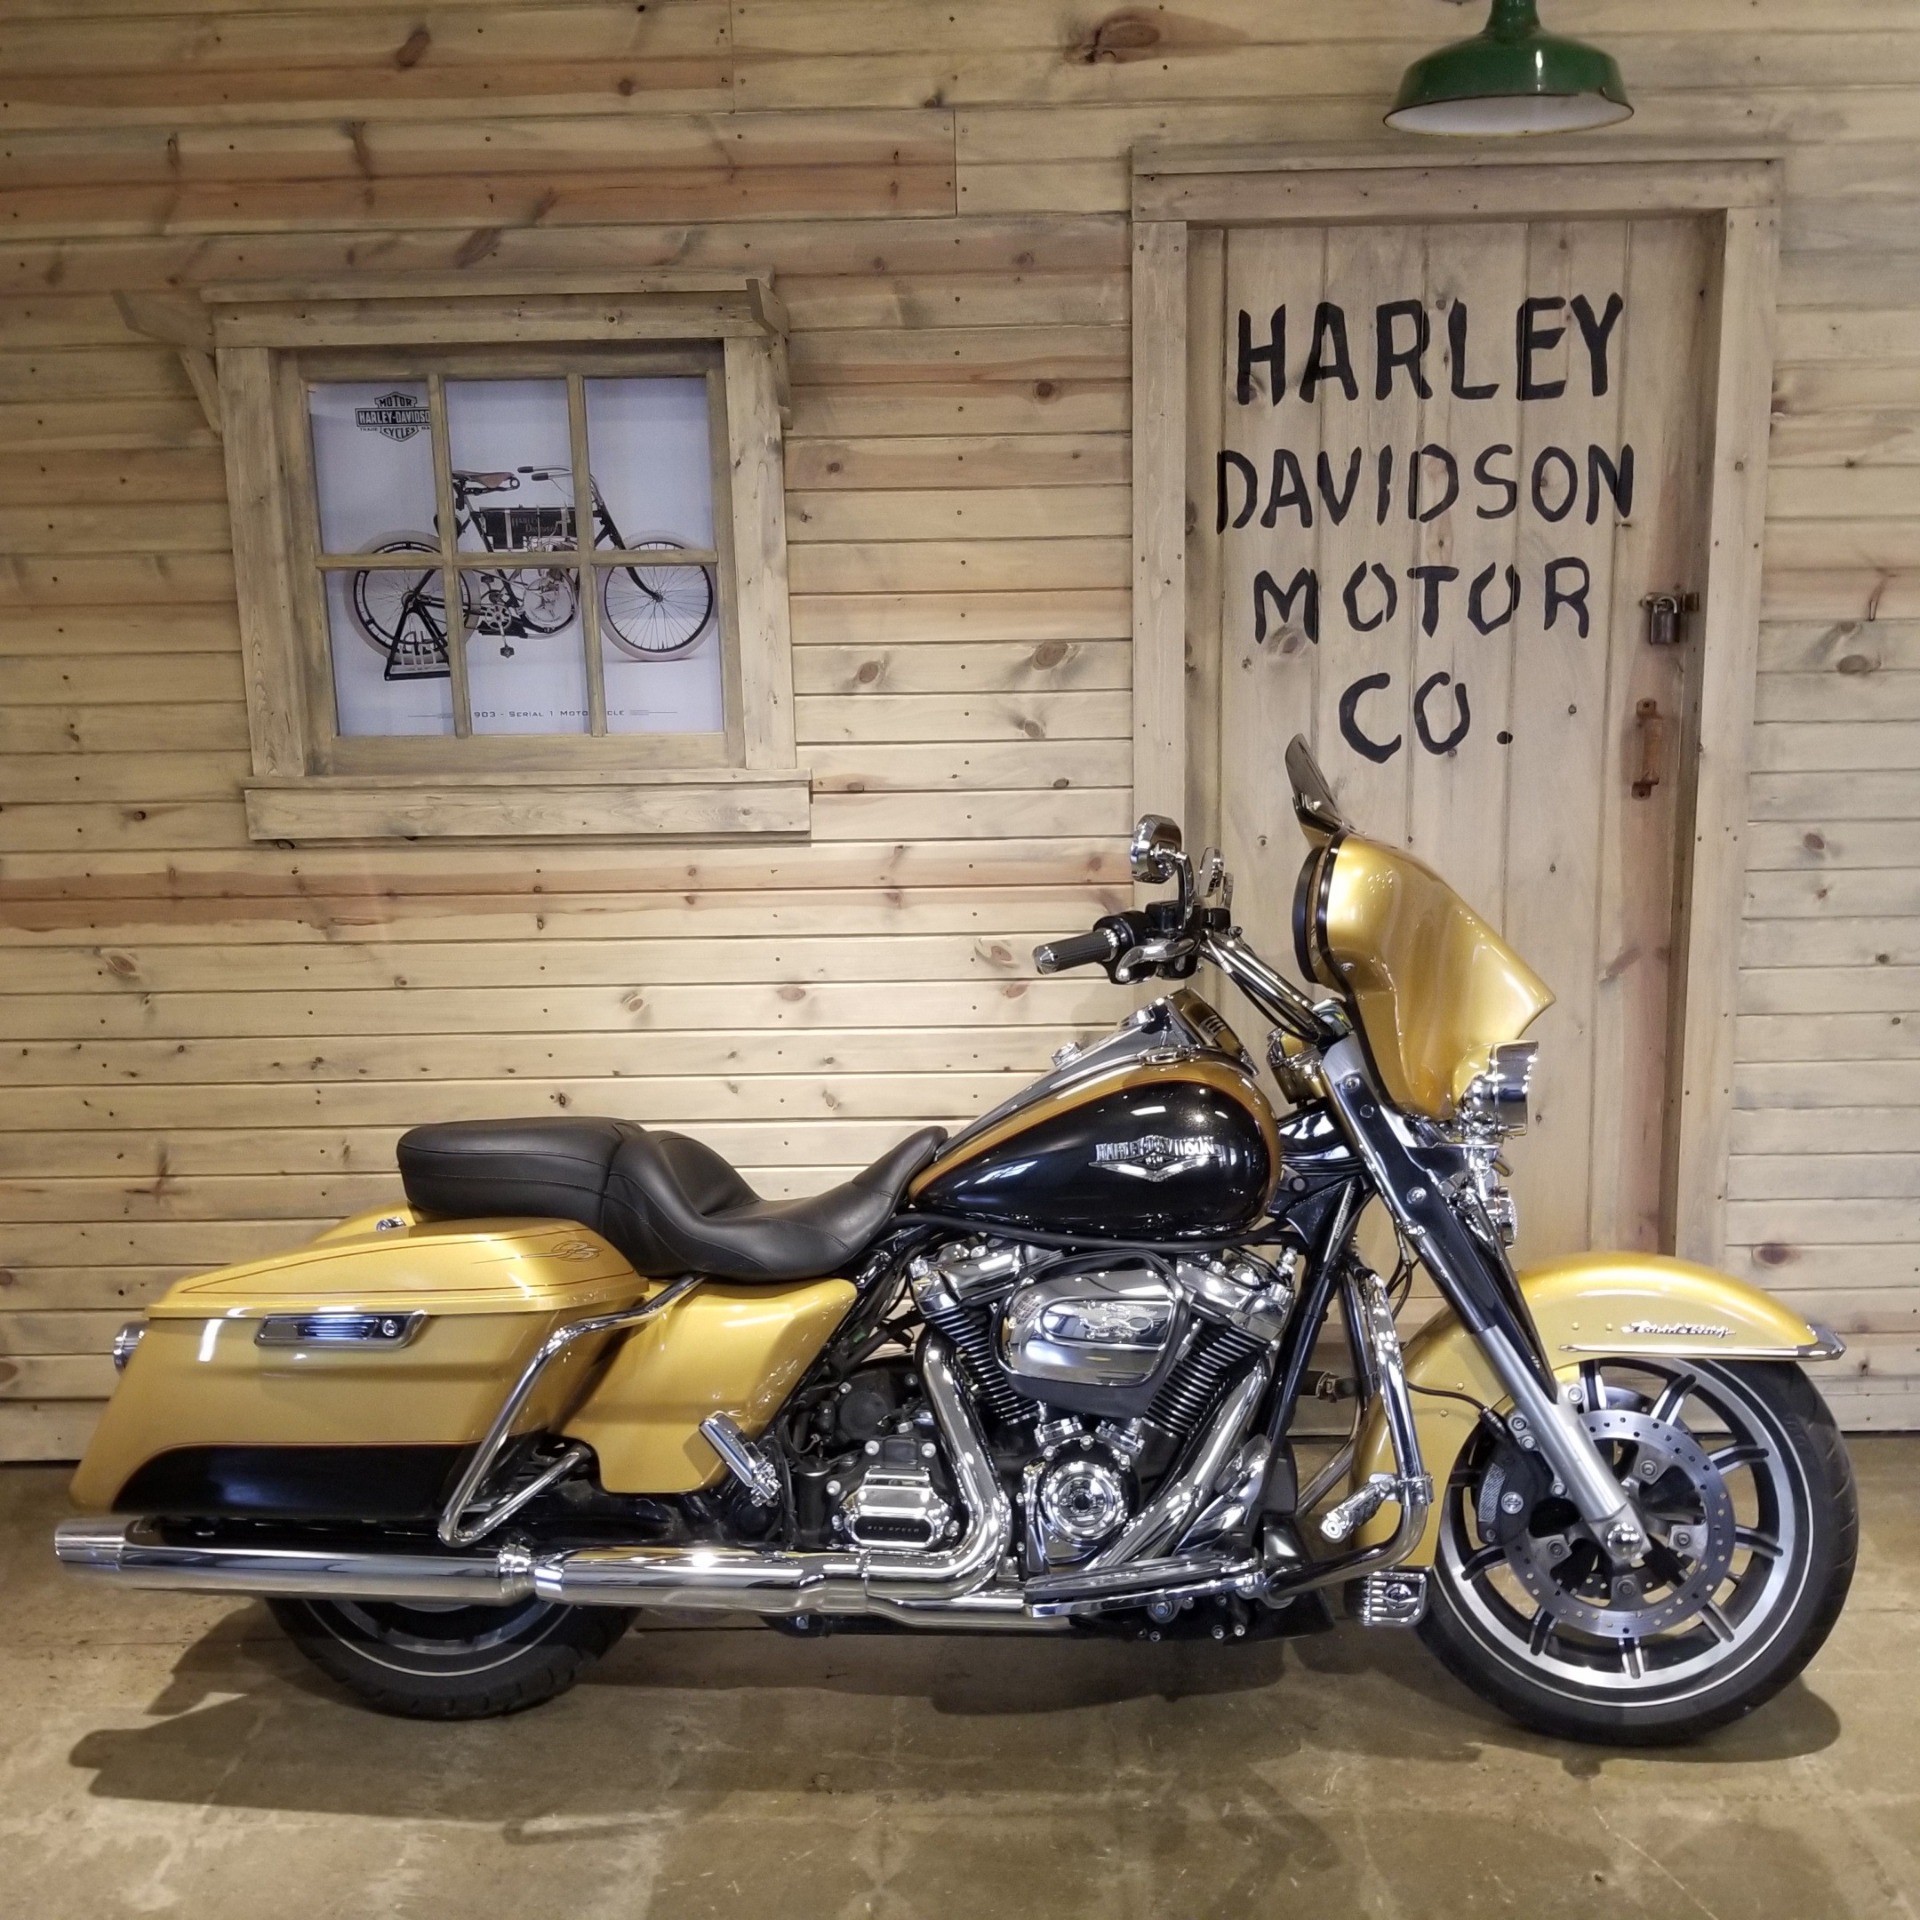 Used 2017 Harley Davidson Road King Motorcycles In Mentor Oh Stock Number 17 N K300096